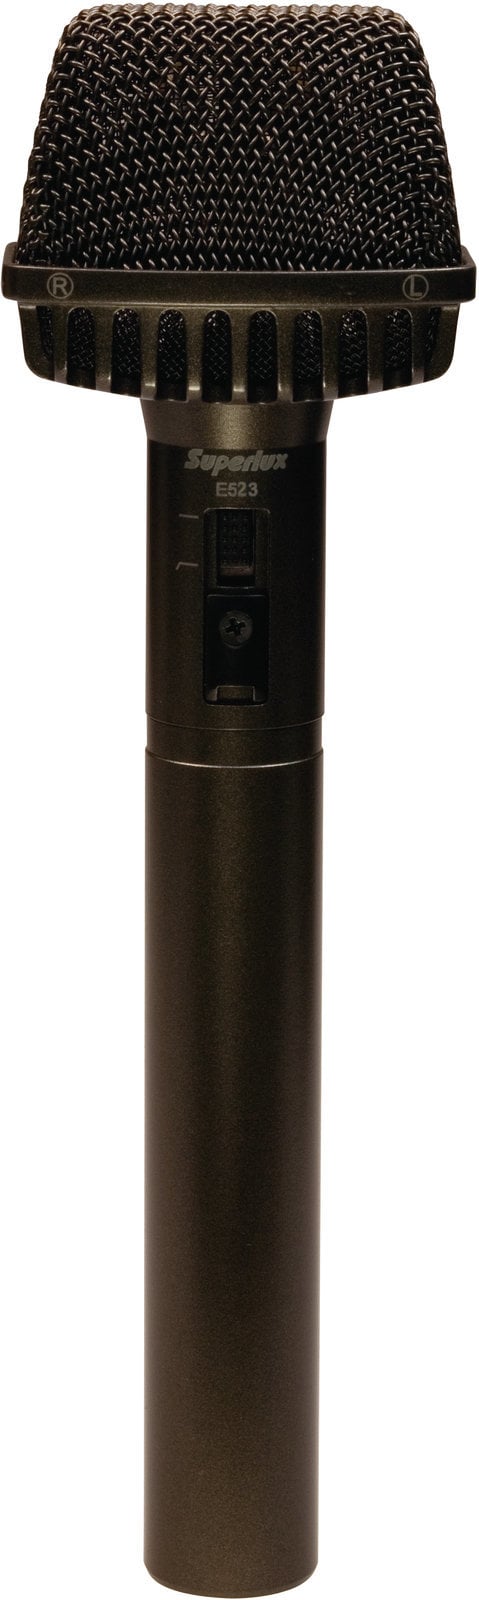 Stereo mikrofony Superlux E523D